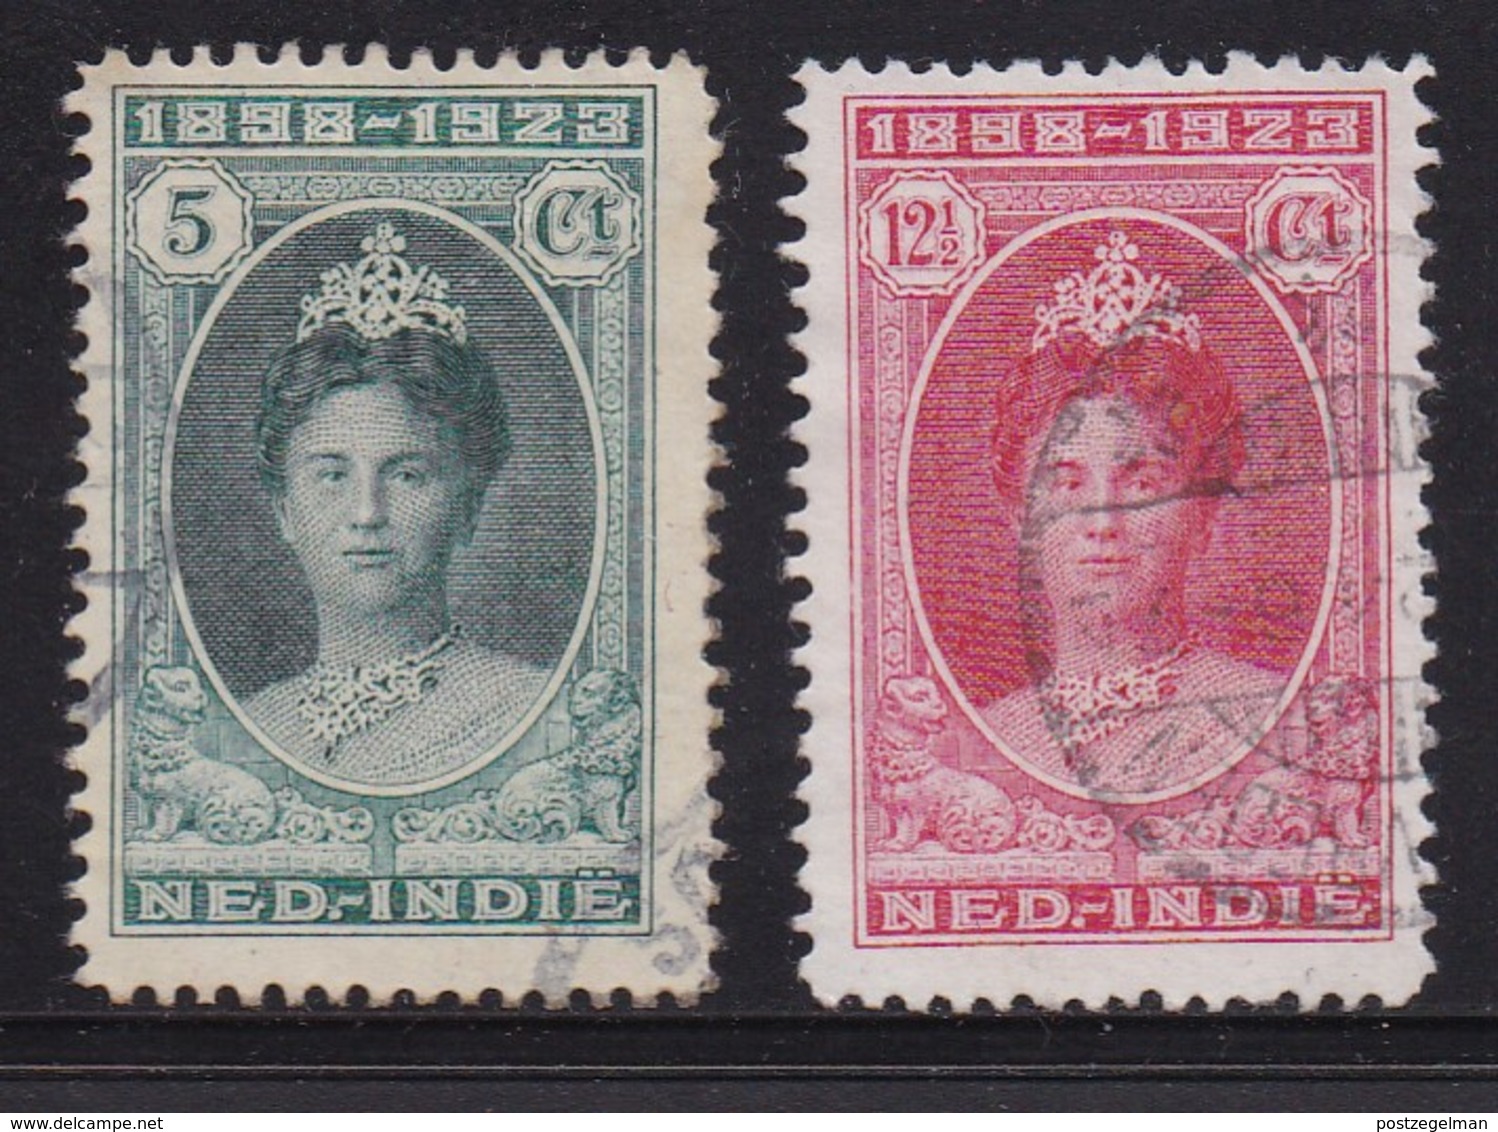 NETHERLAND-INDIES, 1923, Used Stamp(s), Jubilee Wilhelmina , NVPH 160=166, Scannr. 5416, 2 Values Only - Netherlands Indies